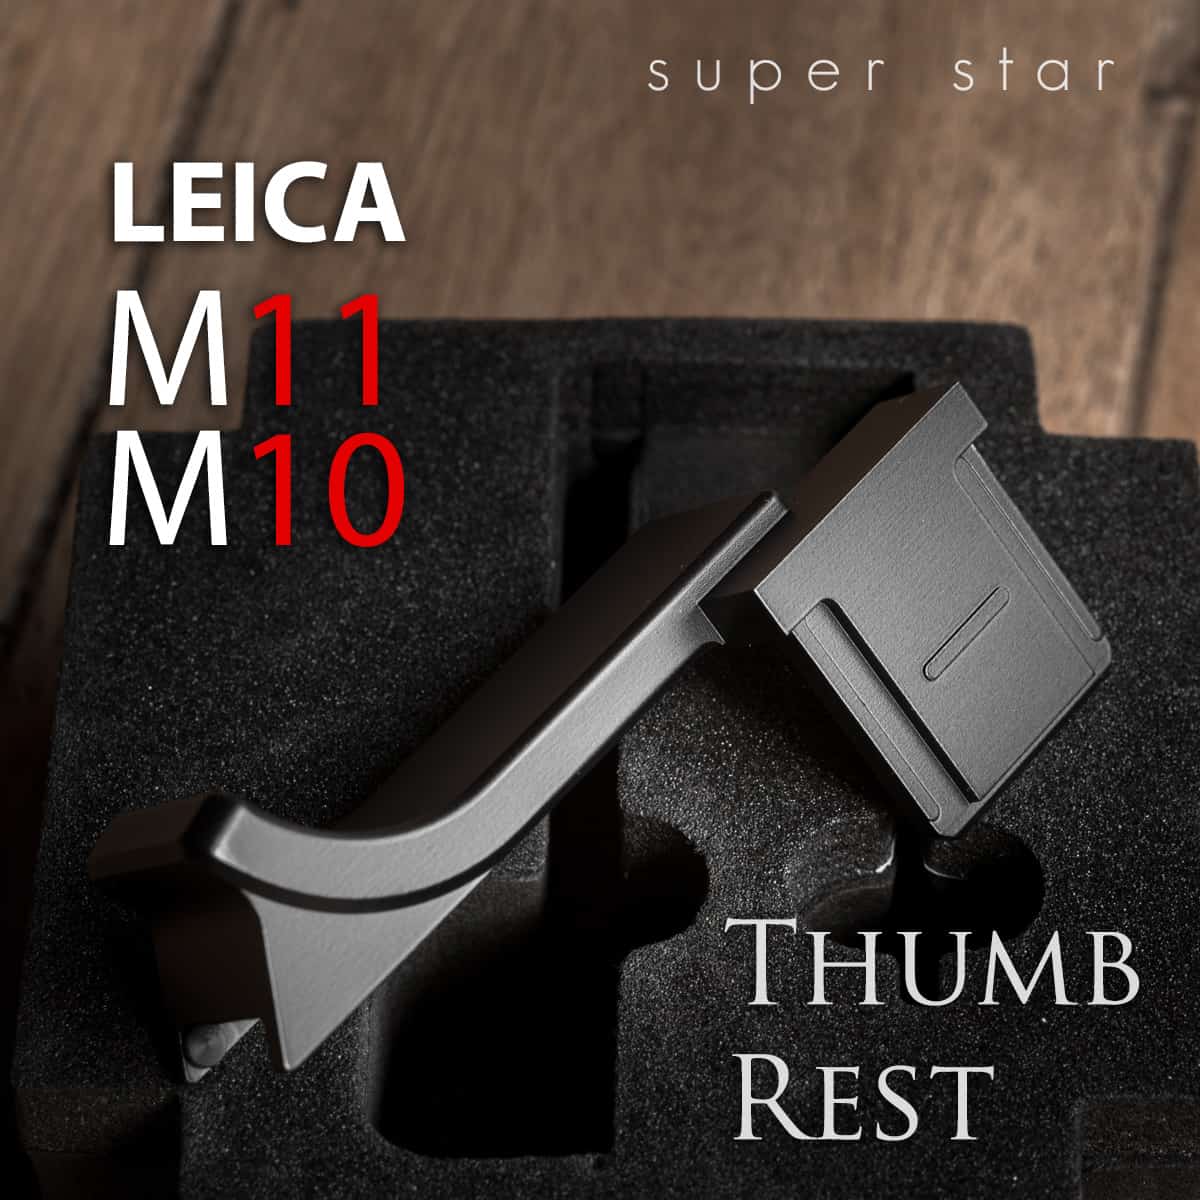 Thumb Rest Leica M11 M10 Black ที่พักนิ้ว Hand Grip จาก Super Star